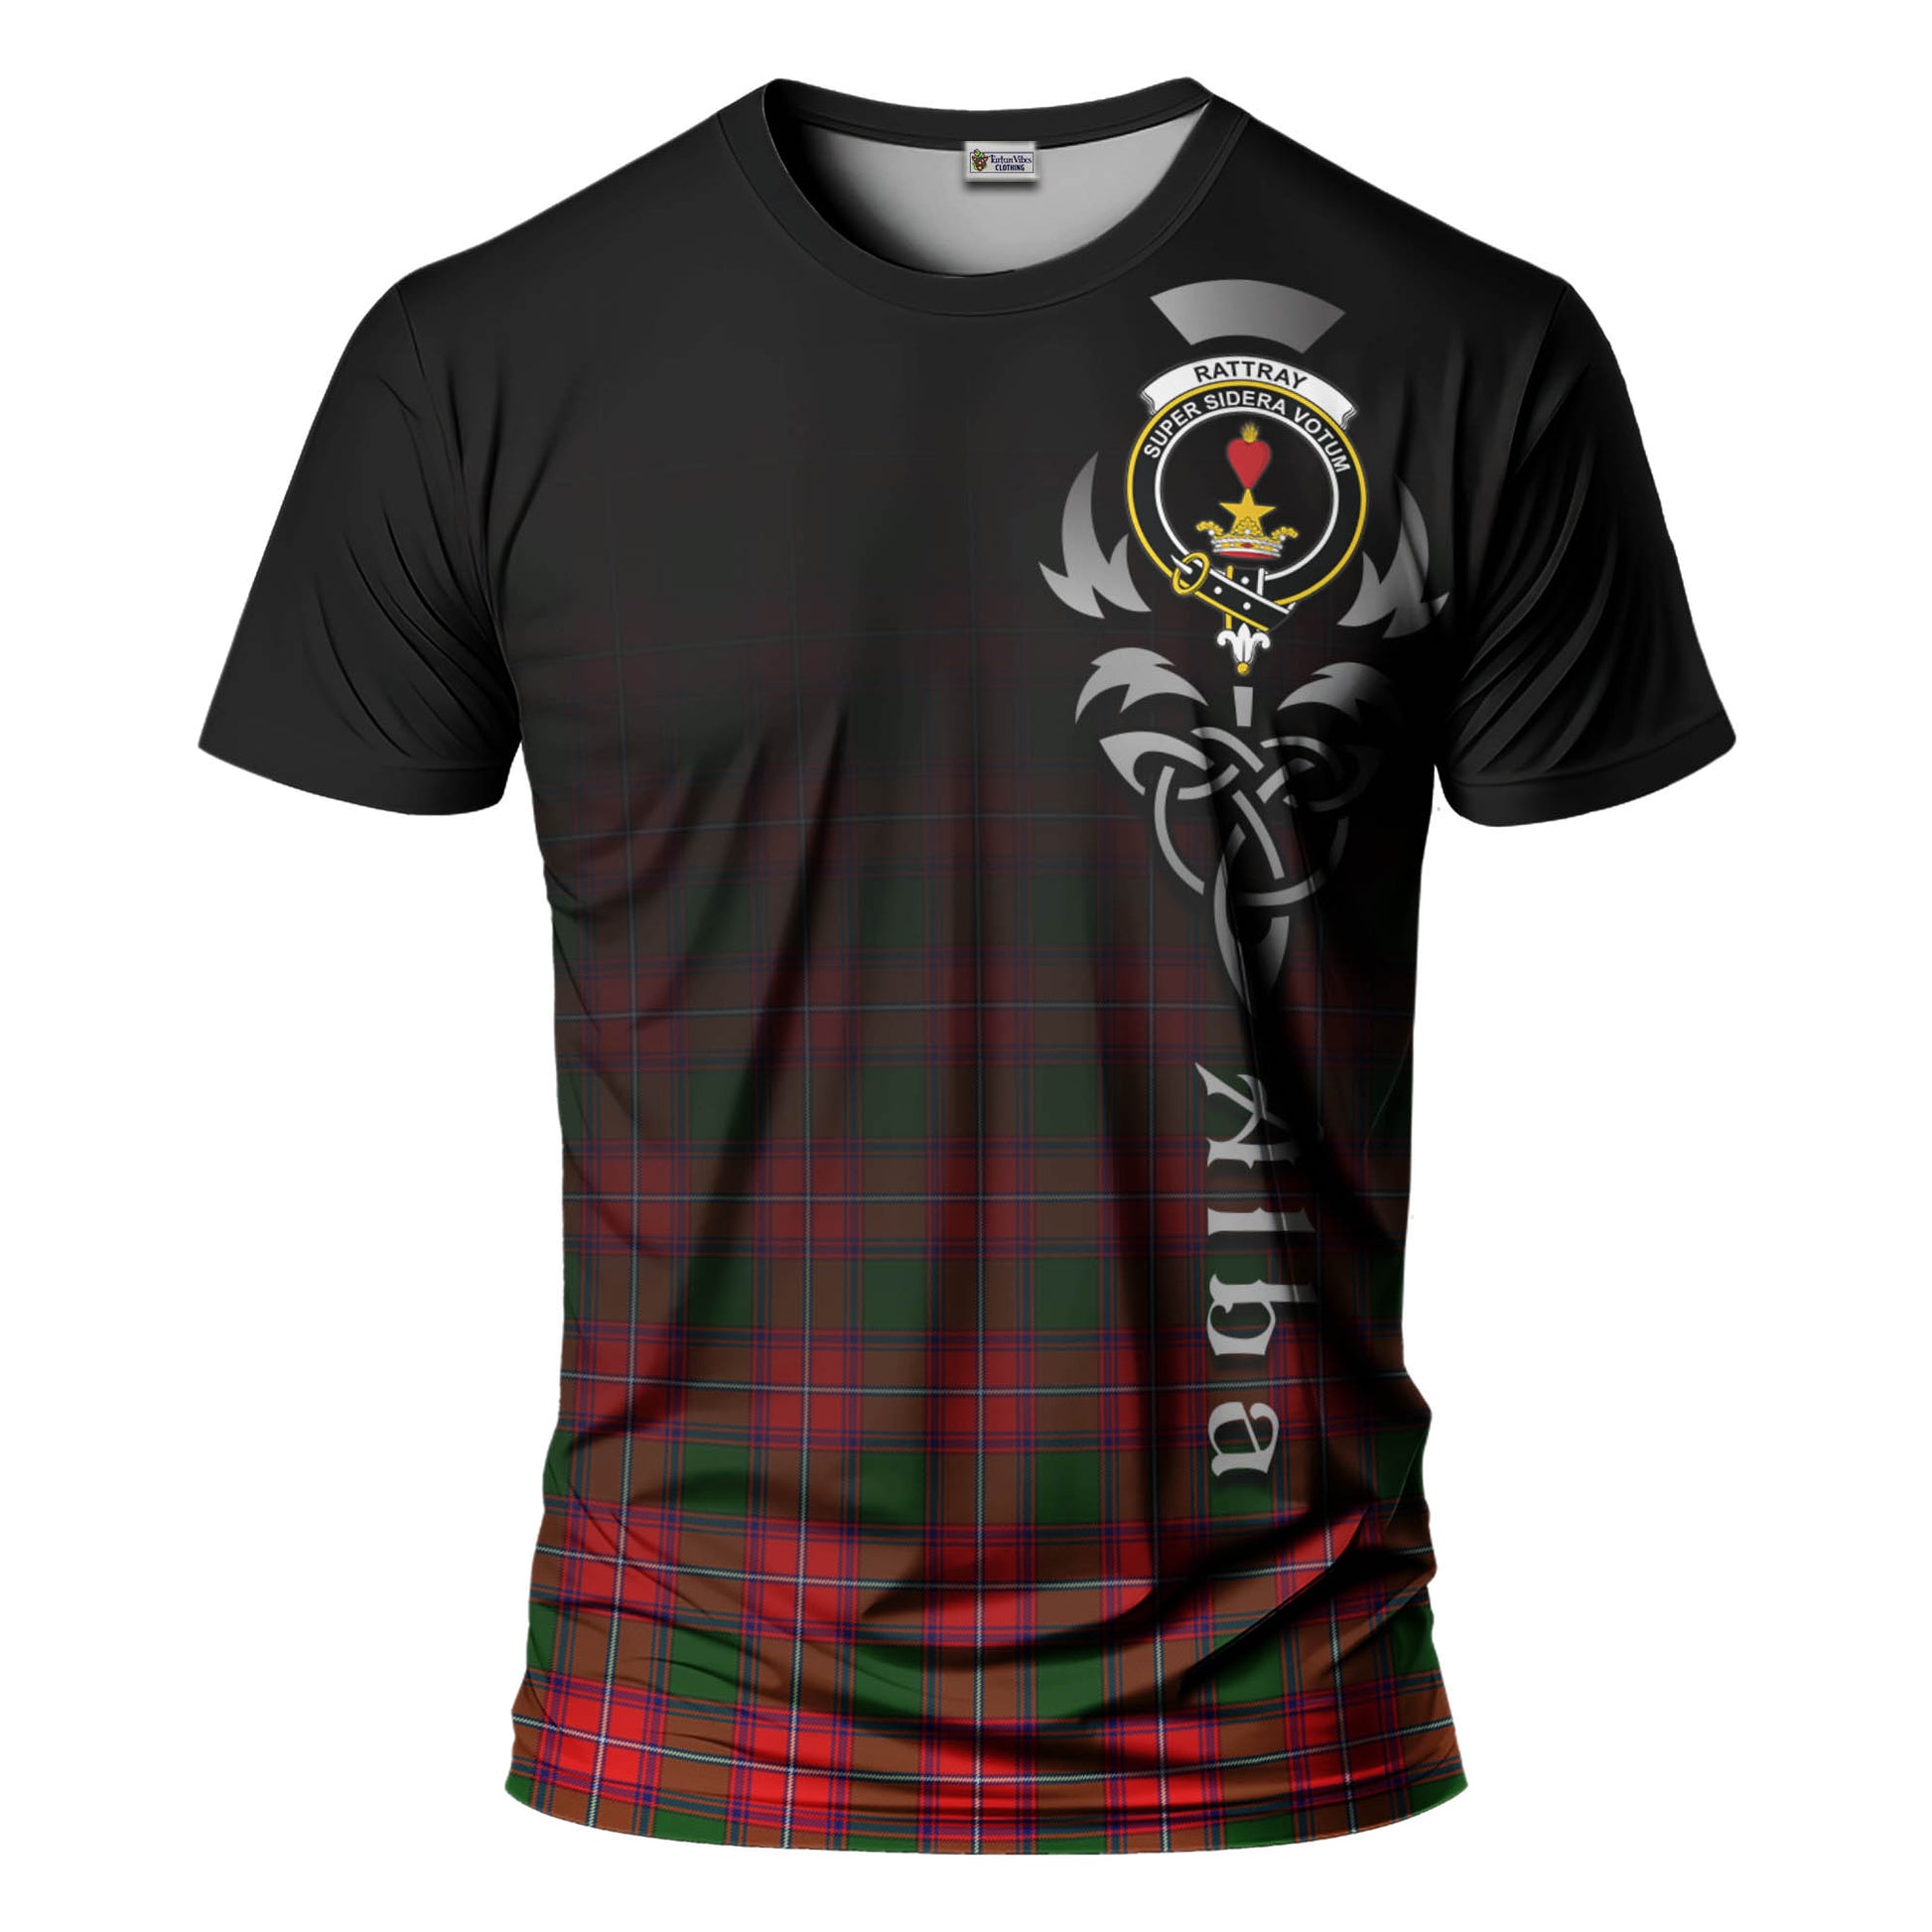 Tartan Vibes Clothing Rattray Modern Tartan T-Shirt Featuring Alba Gu Brath Family Crest Celtic Inspired